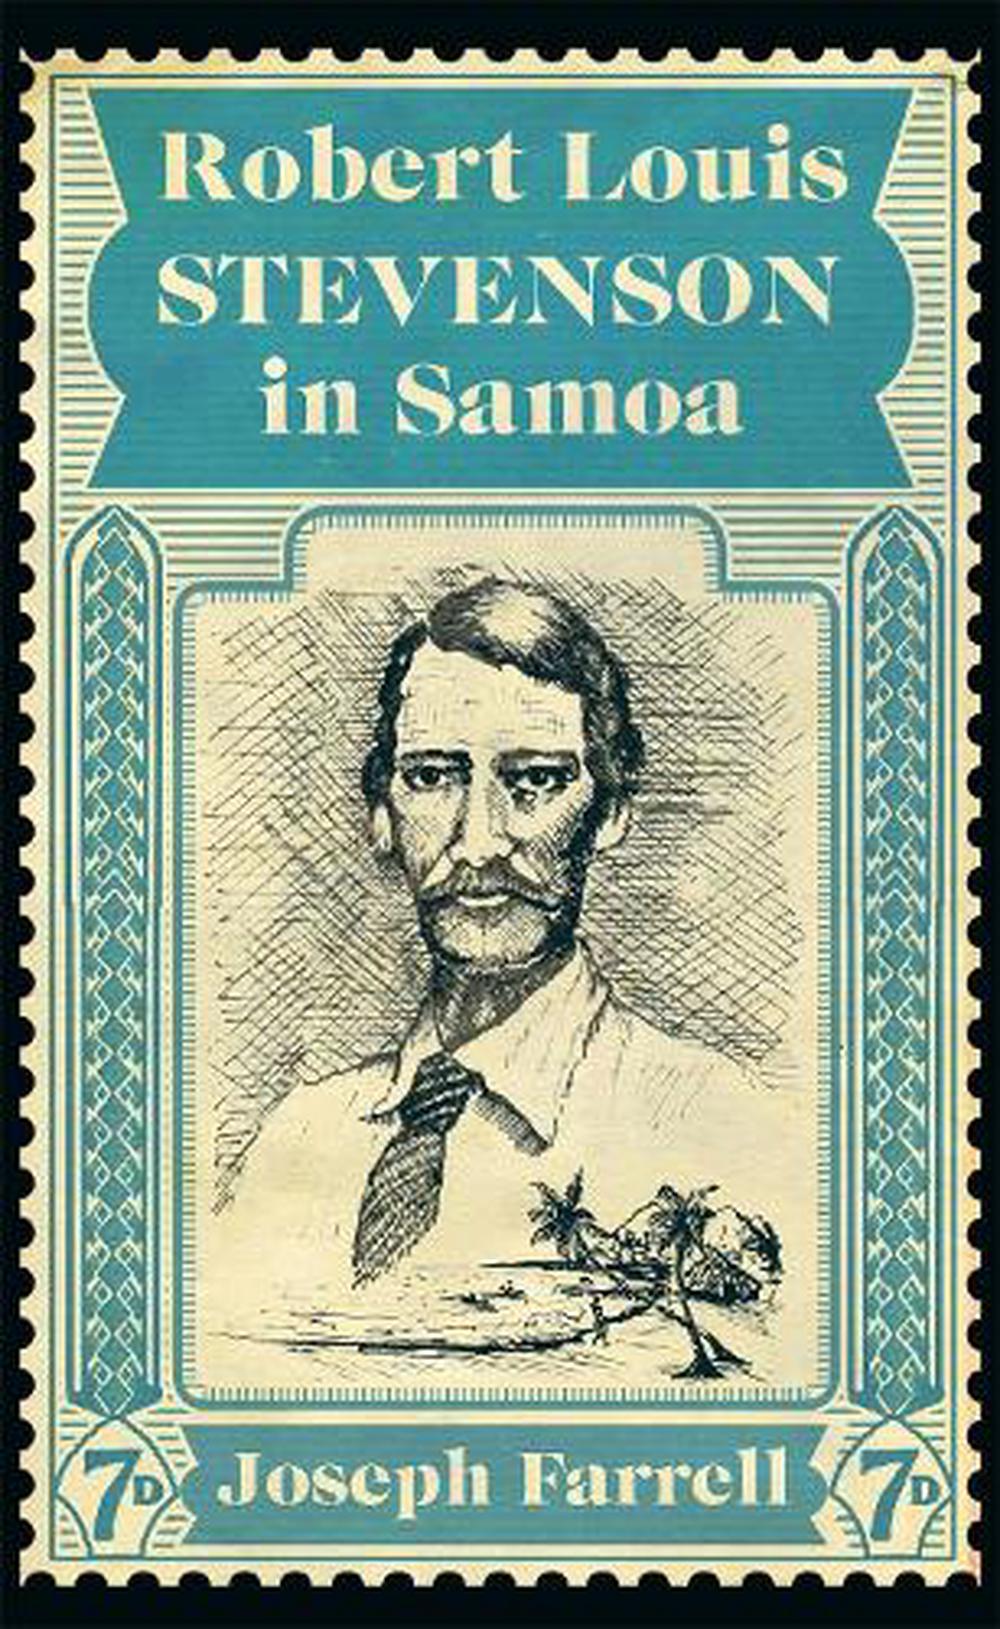 Robert Louis Stevenson in Samoa by Joseph Farrell Hardcover Book Free Shipping! - Photo 1/1